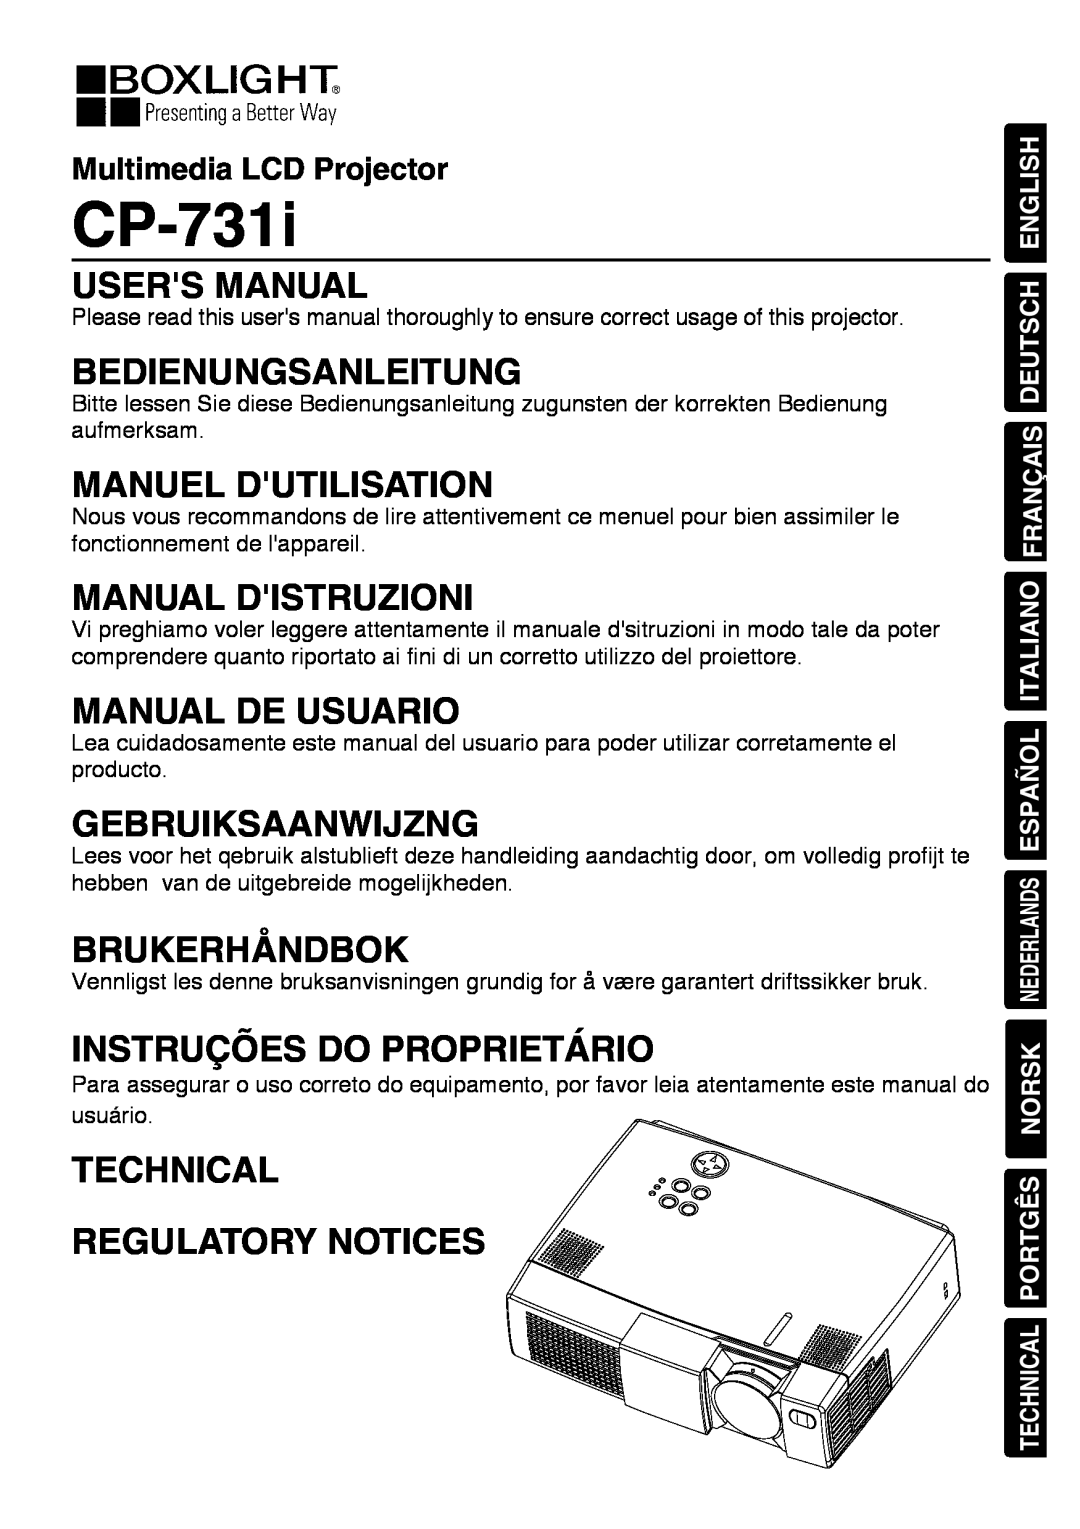 Grundig CP-731i user manual Users Manual, Bedienungsanleitung, Manuel Dutilisation, Manual Distruzioni, Manual De Usuario 